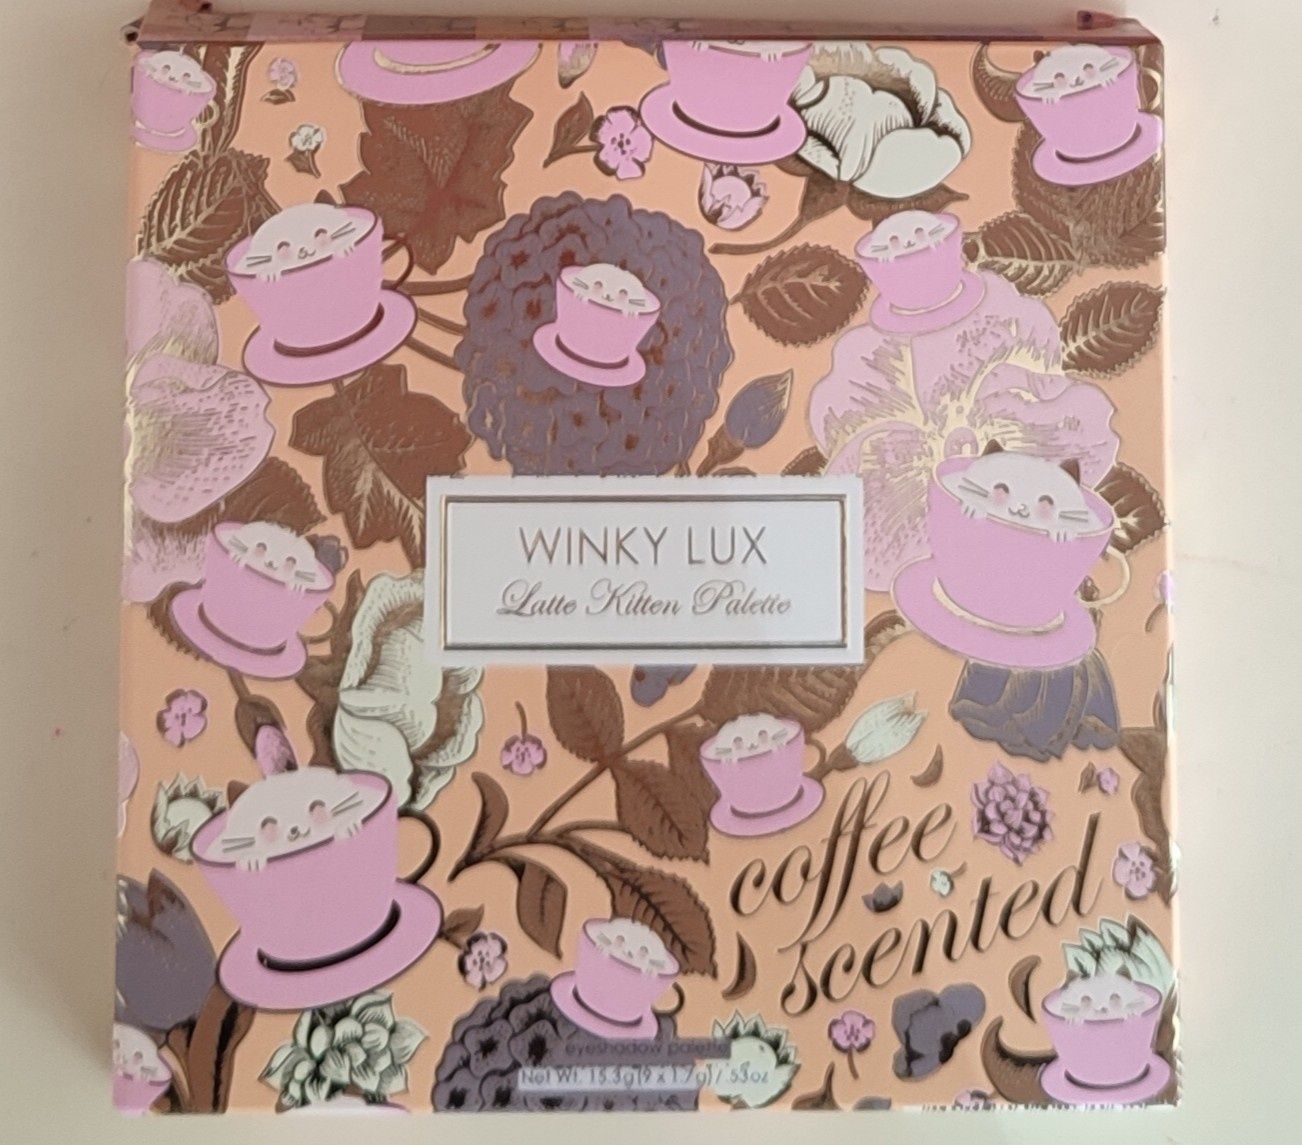 Cienie naturalne, paleta Winky Lux USA - Latte Kitten Palette